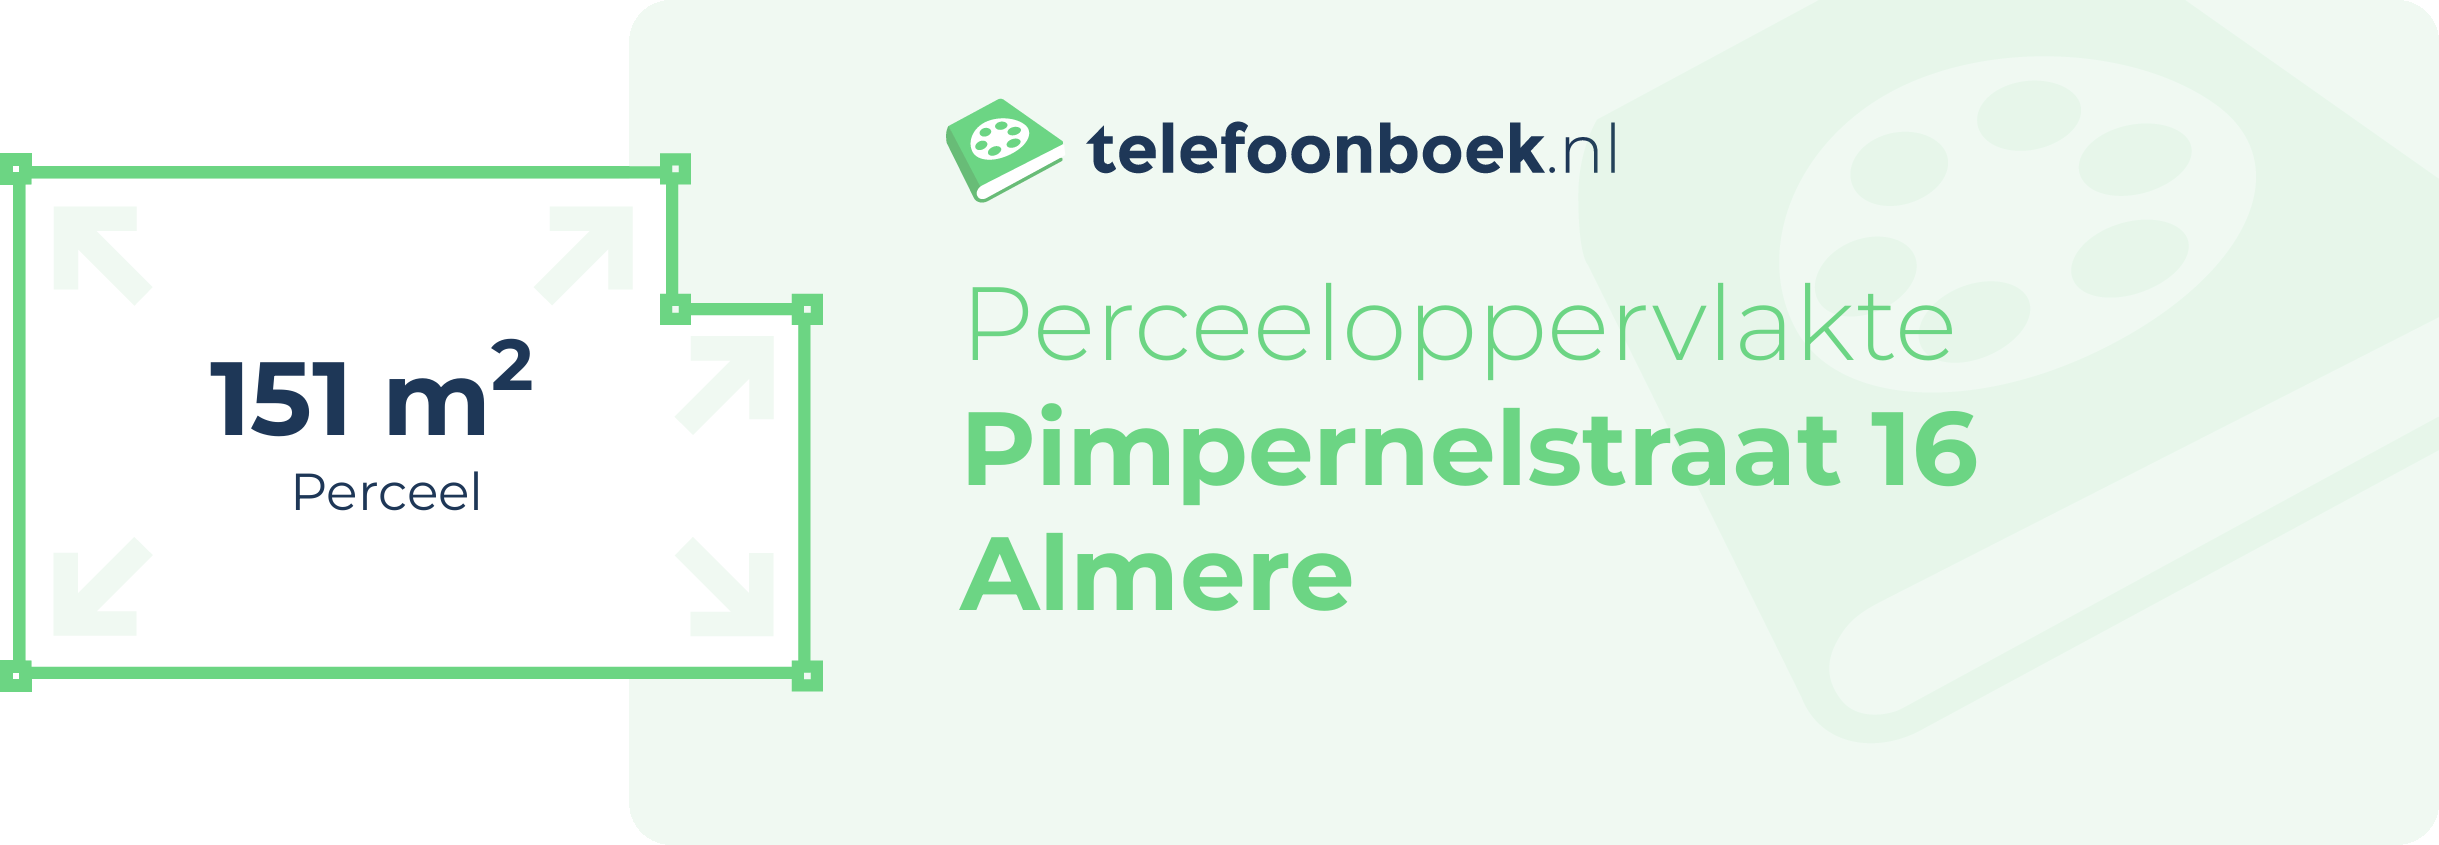 Perceeloppervlakte Pimpernelstraat 16 Almere